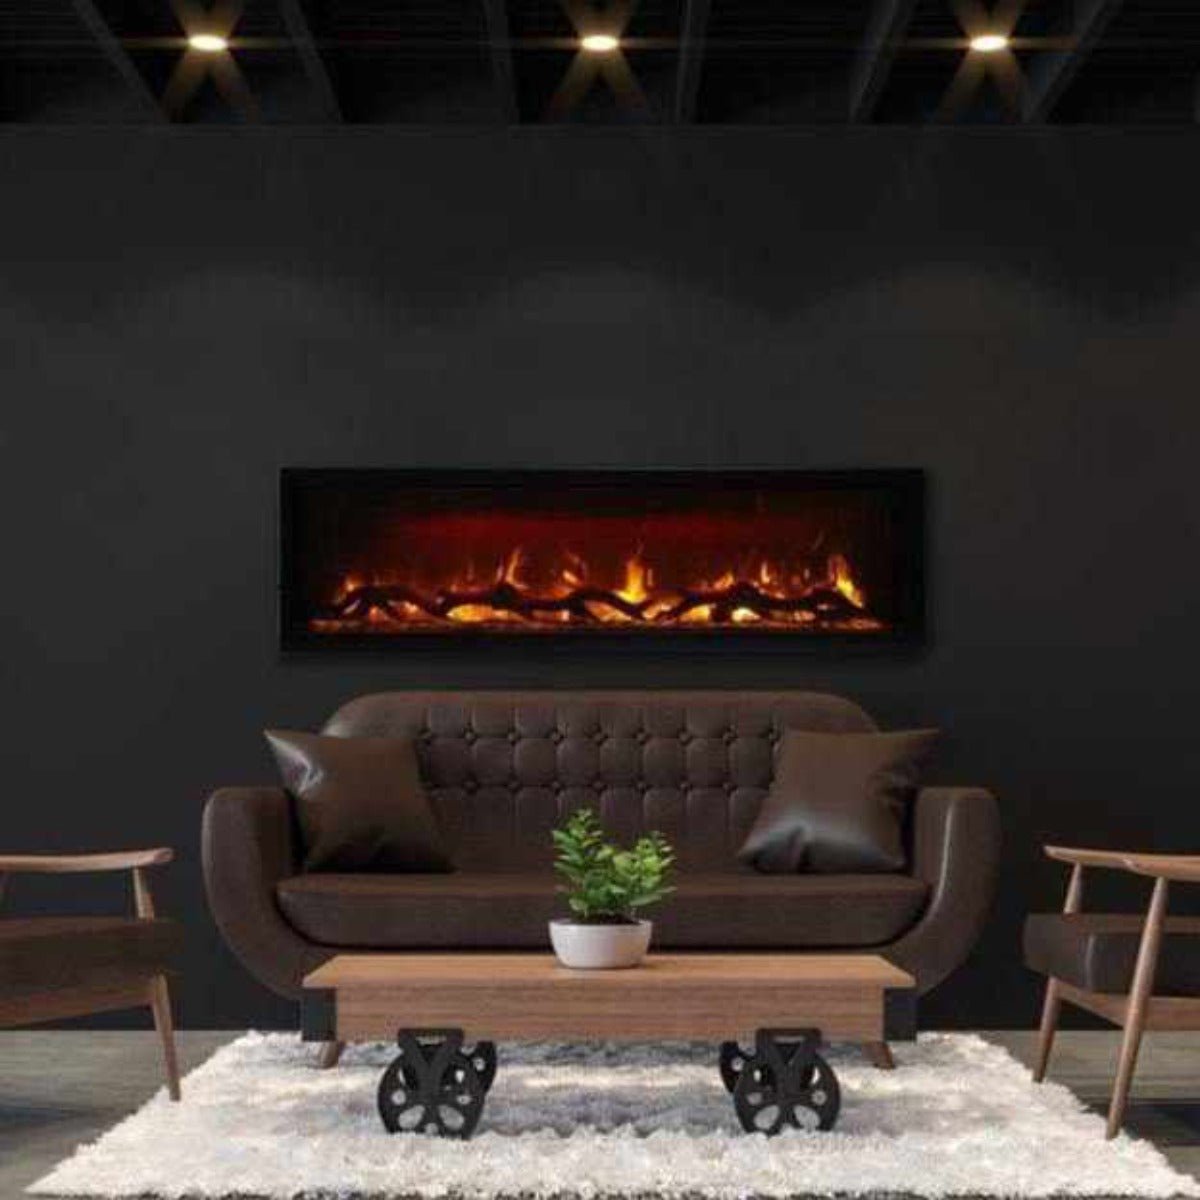 Amantii SYM-60 - Symmetry Electric Fireplace - Indoor or Outdoor 152cm (60") - Outdoorium